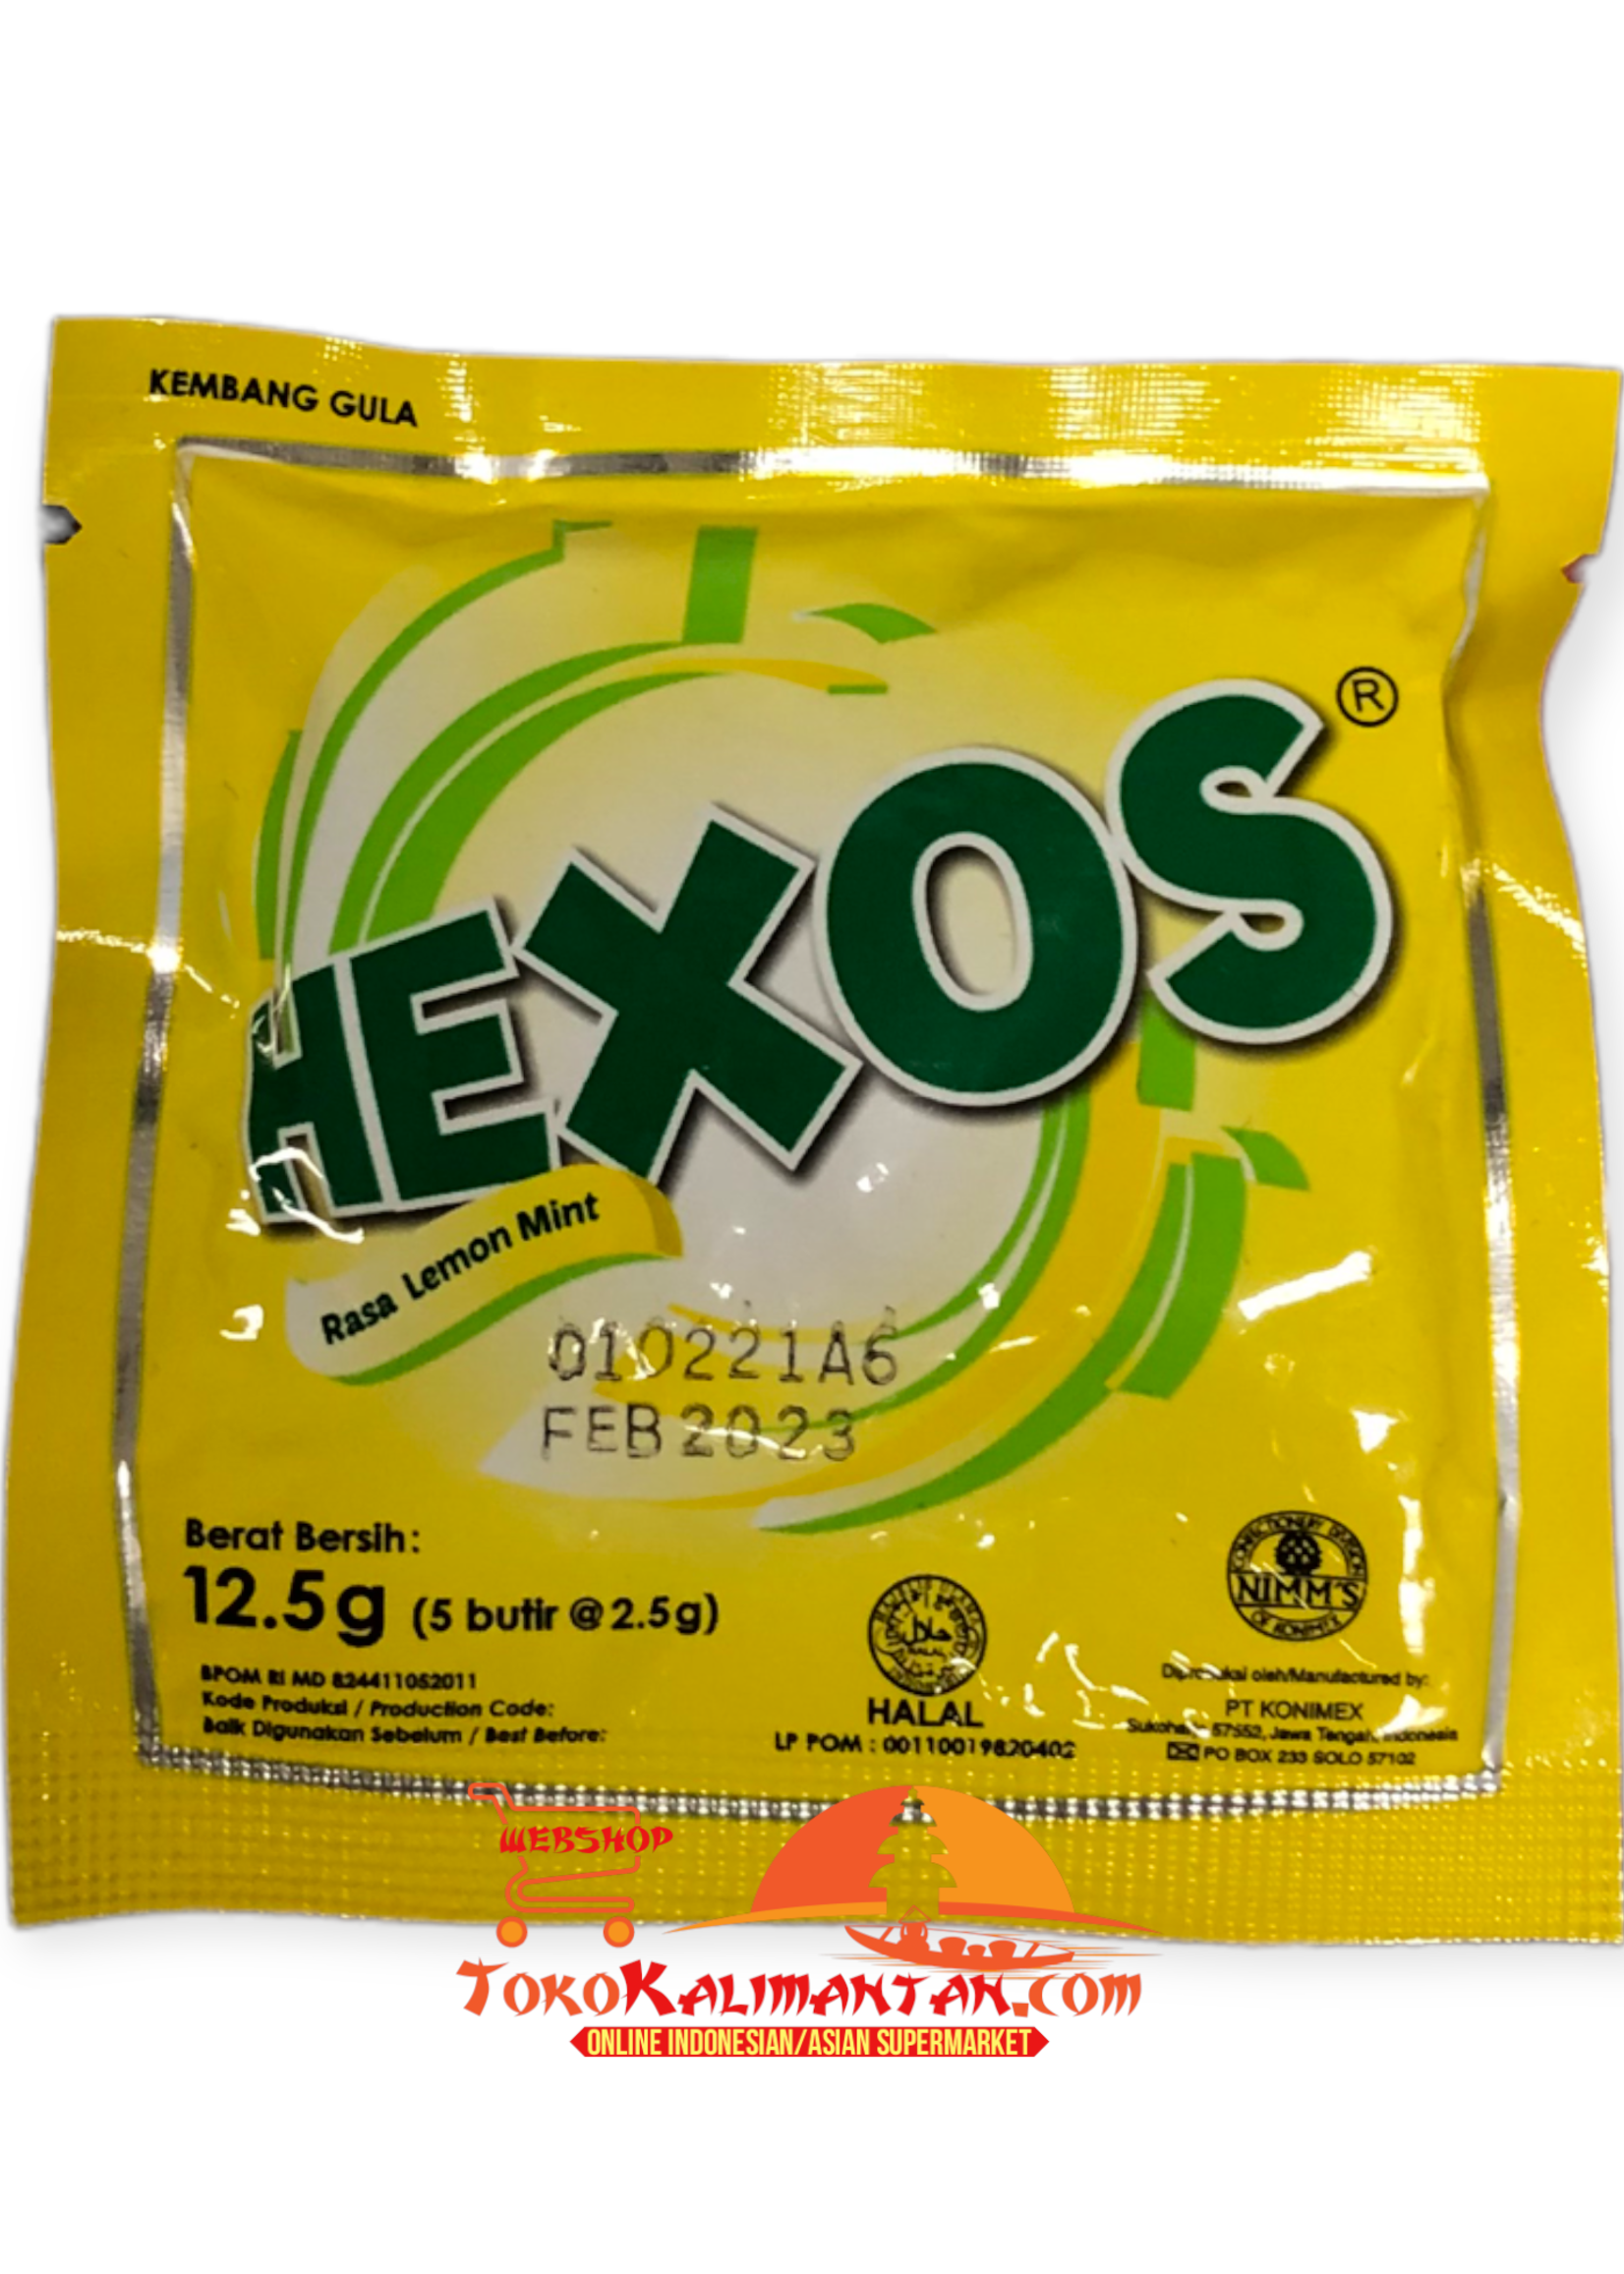 HEXOS HEXOS Permen Rasa Lemon mint 12.5 gram